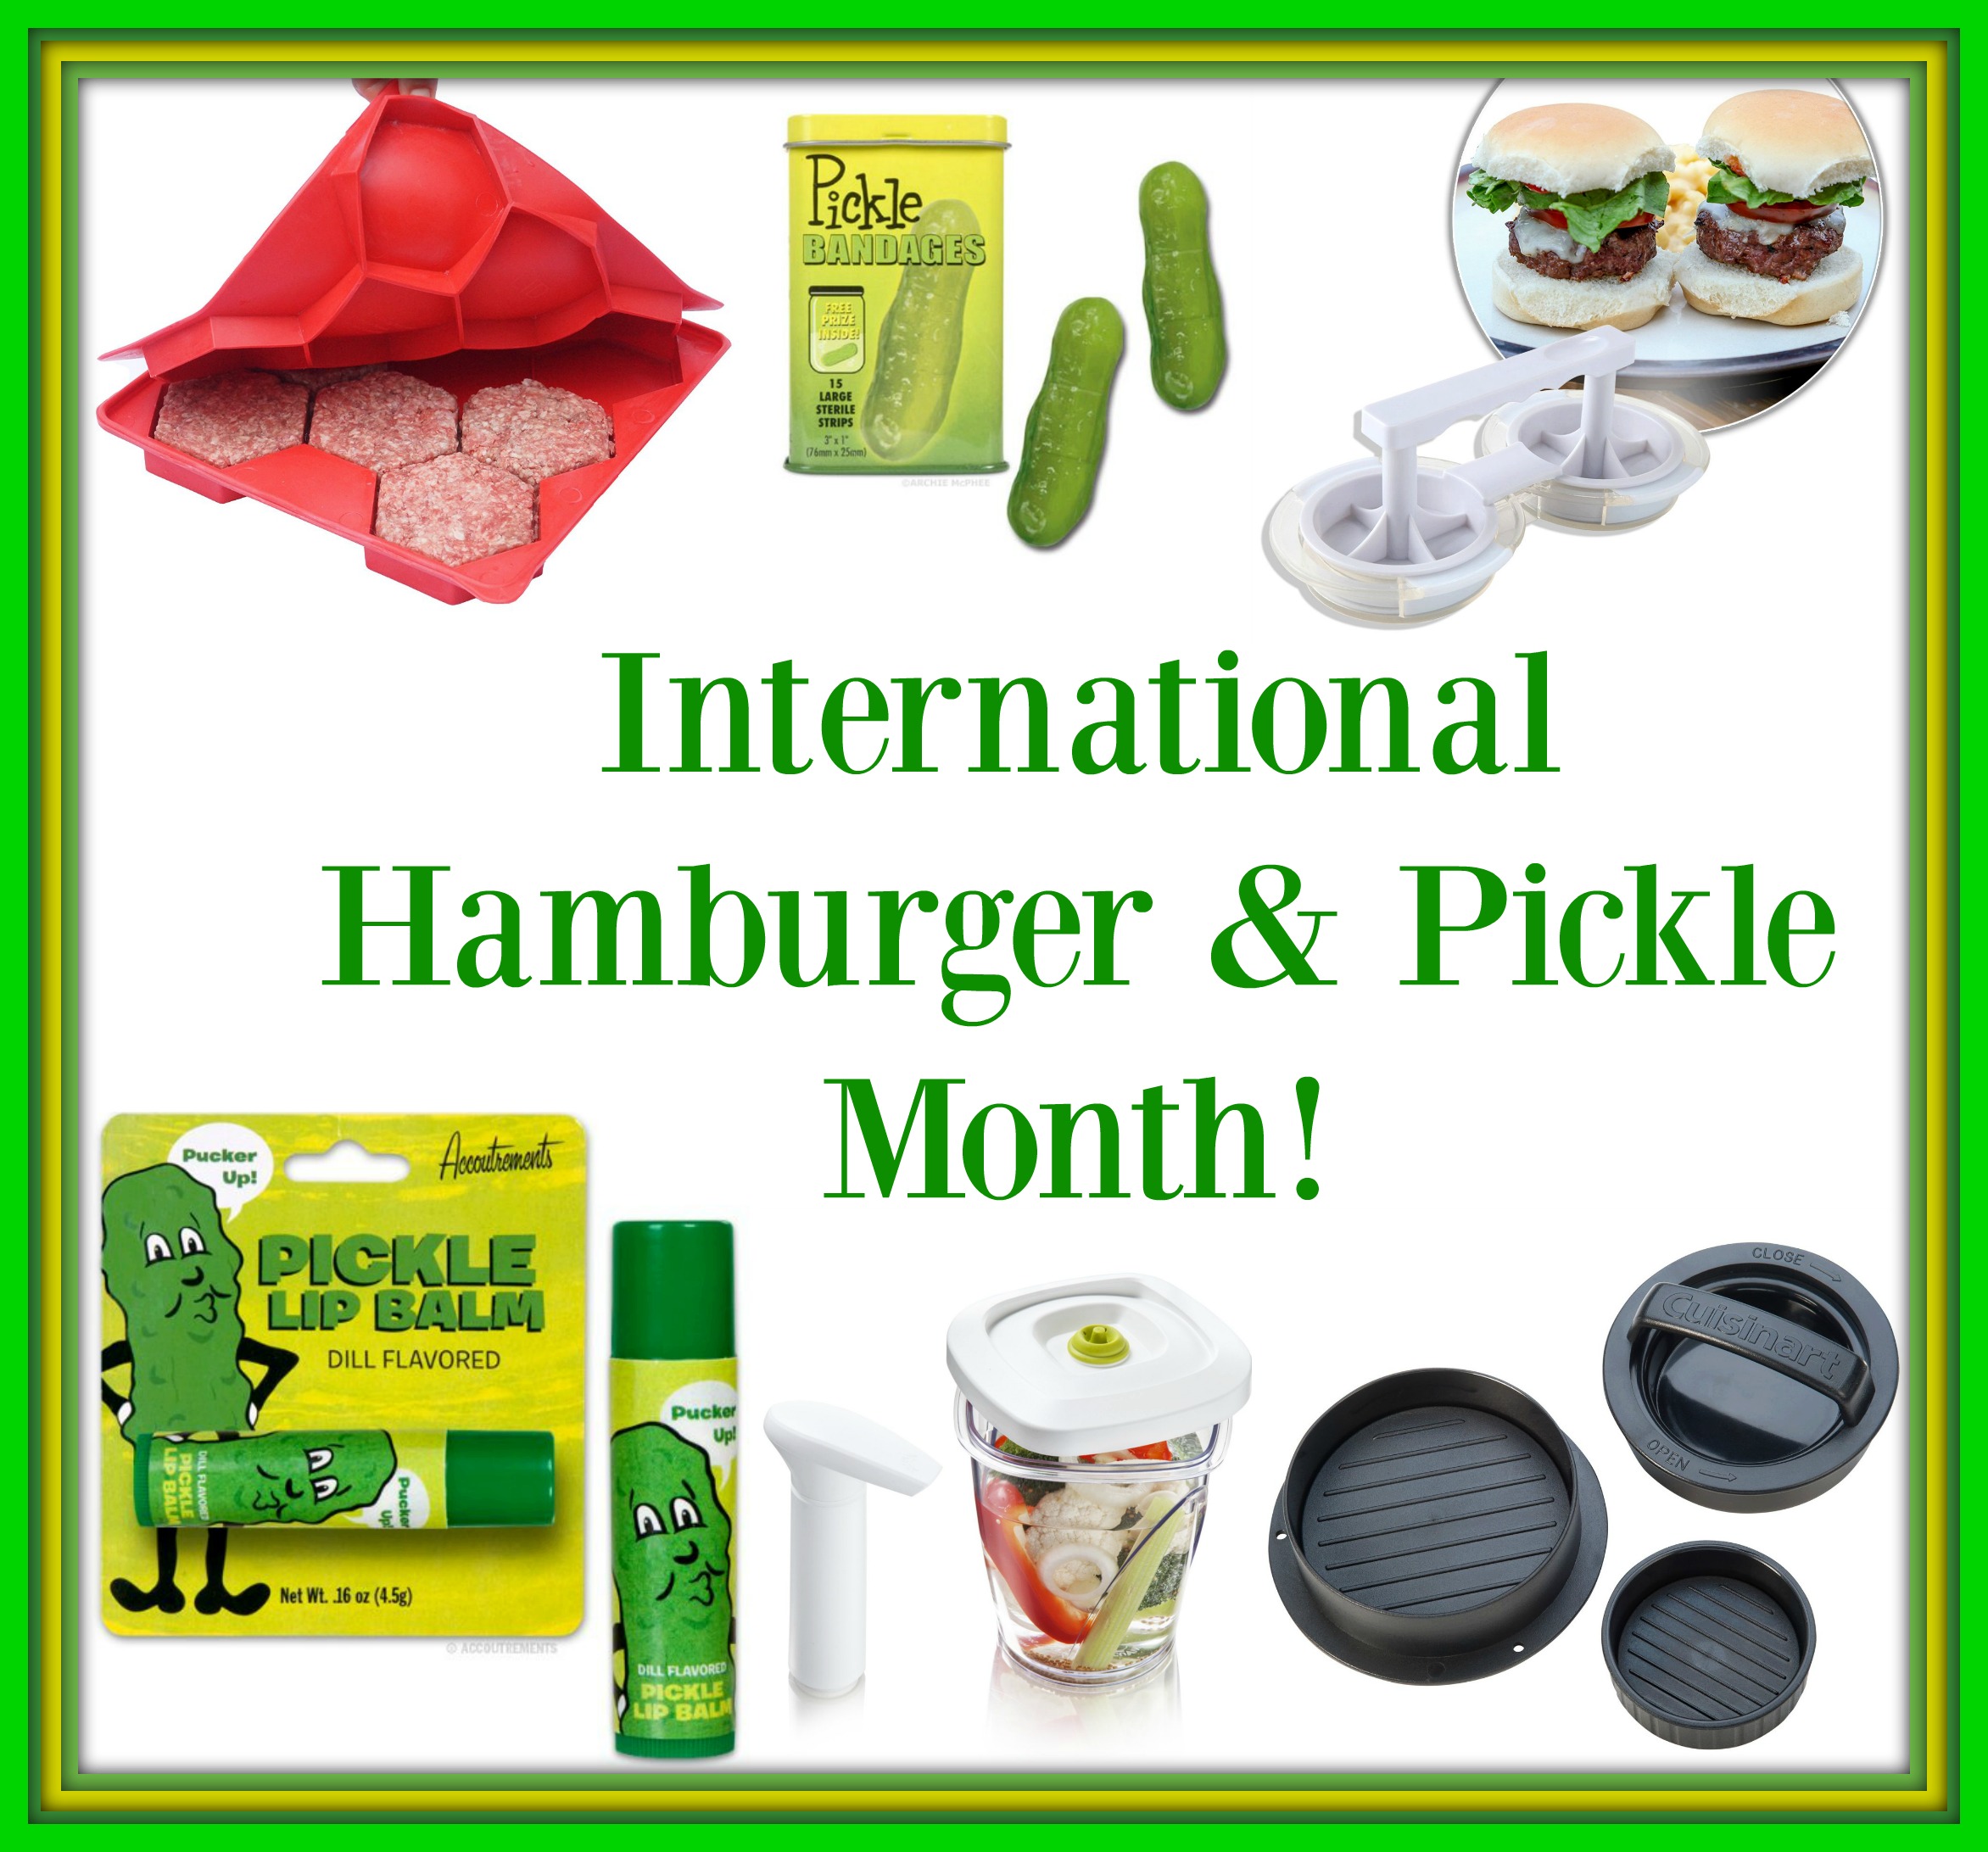 International Hamburger & Pickle Month